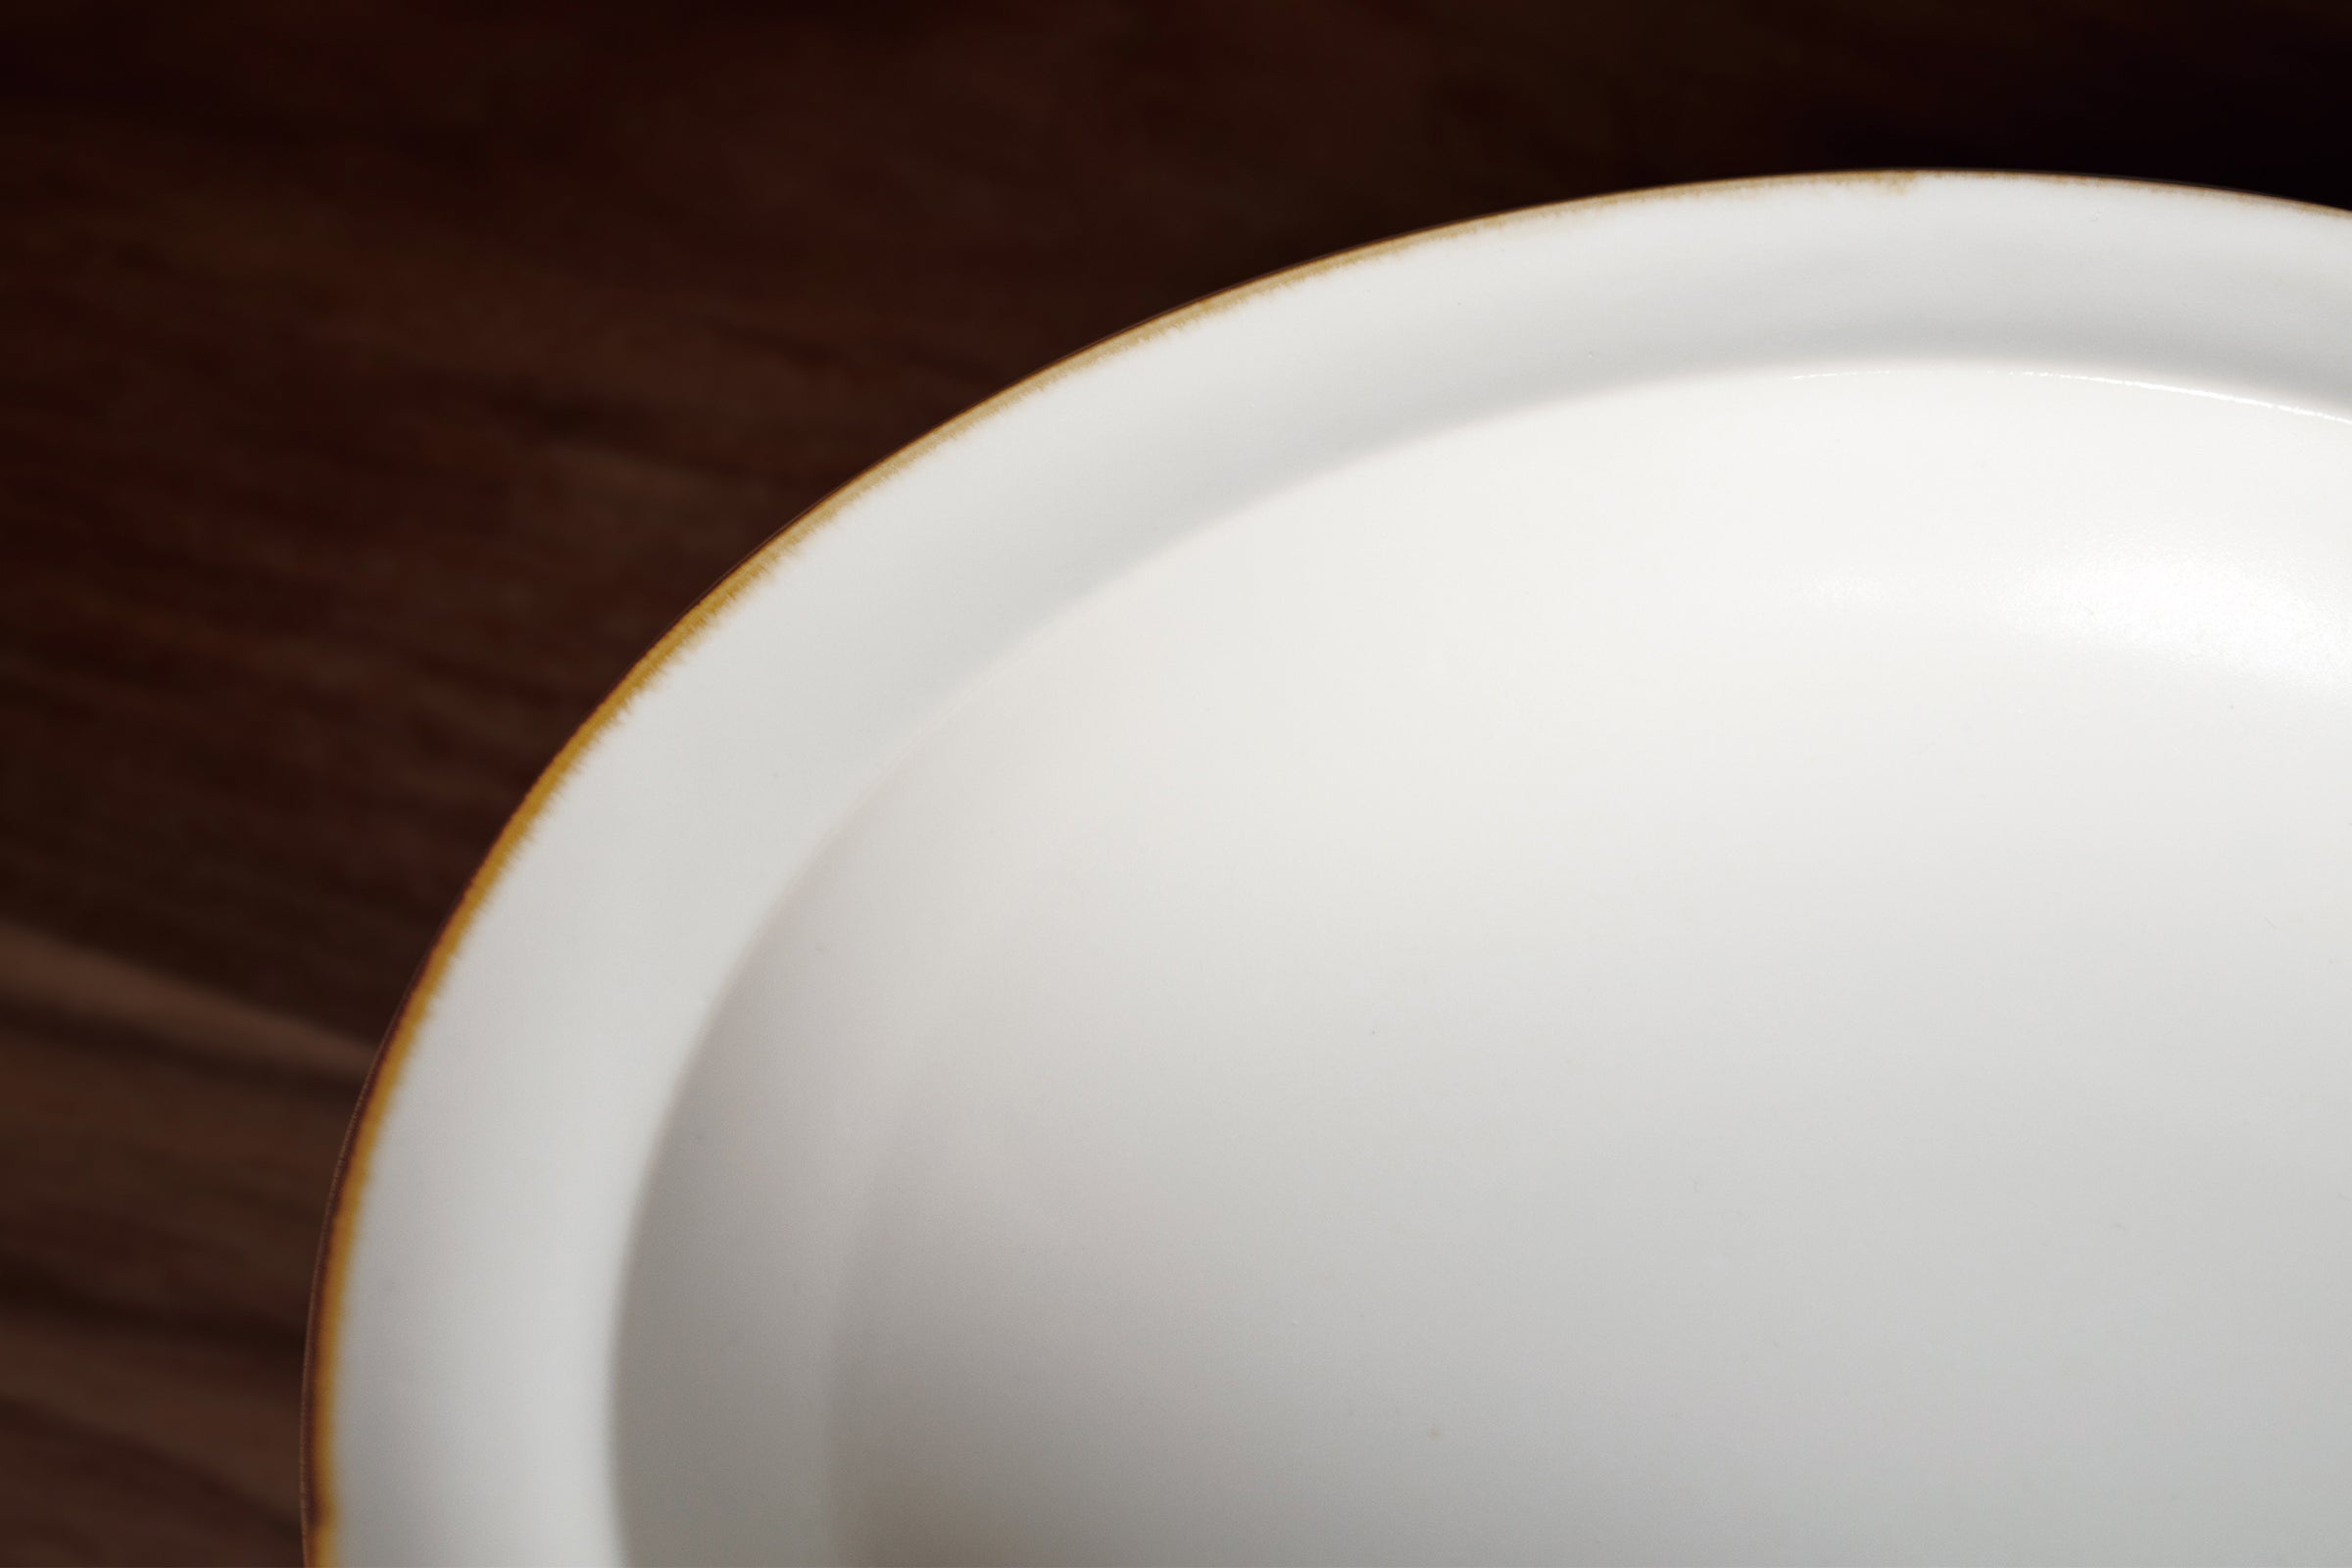 jicon-short-rim-porcelain-bowl-edge-by-sojao